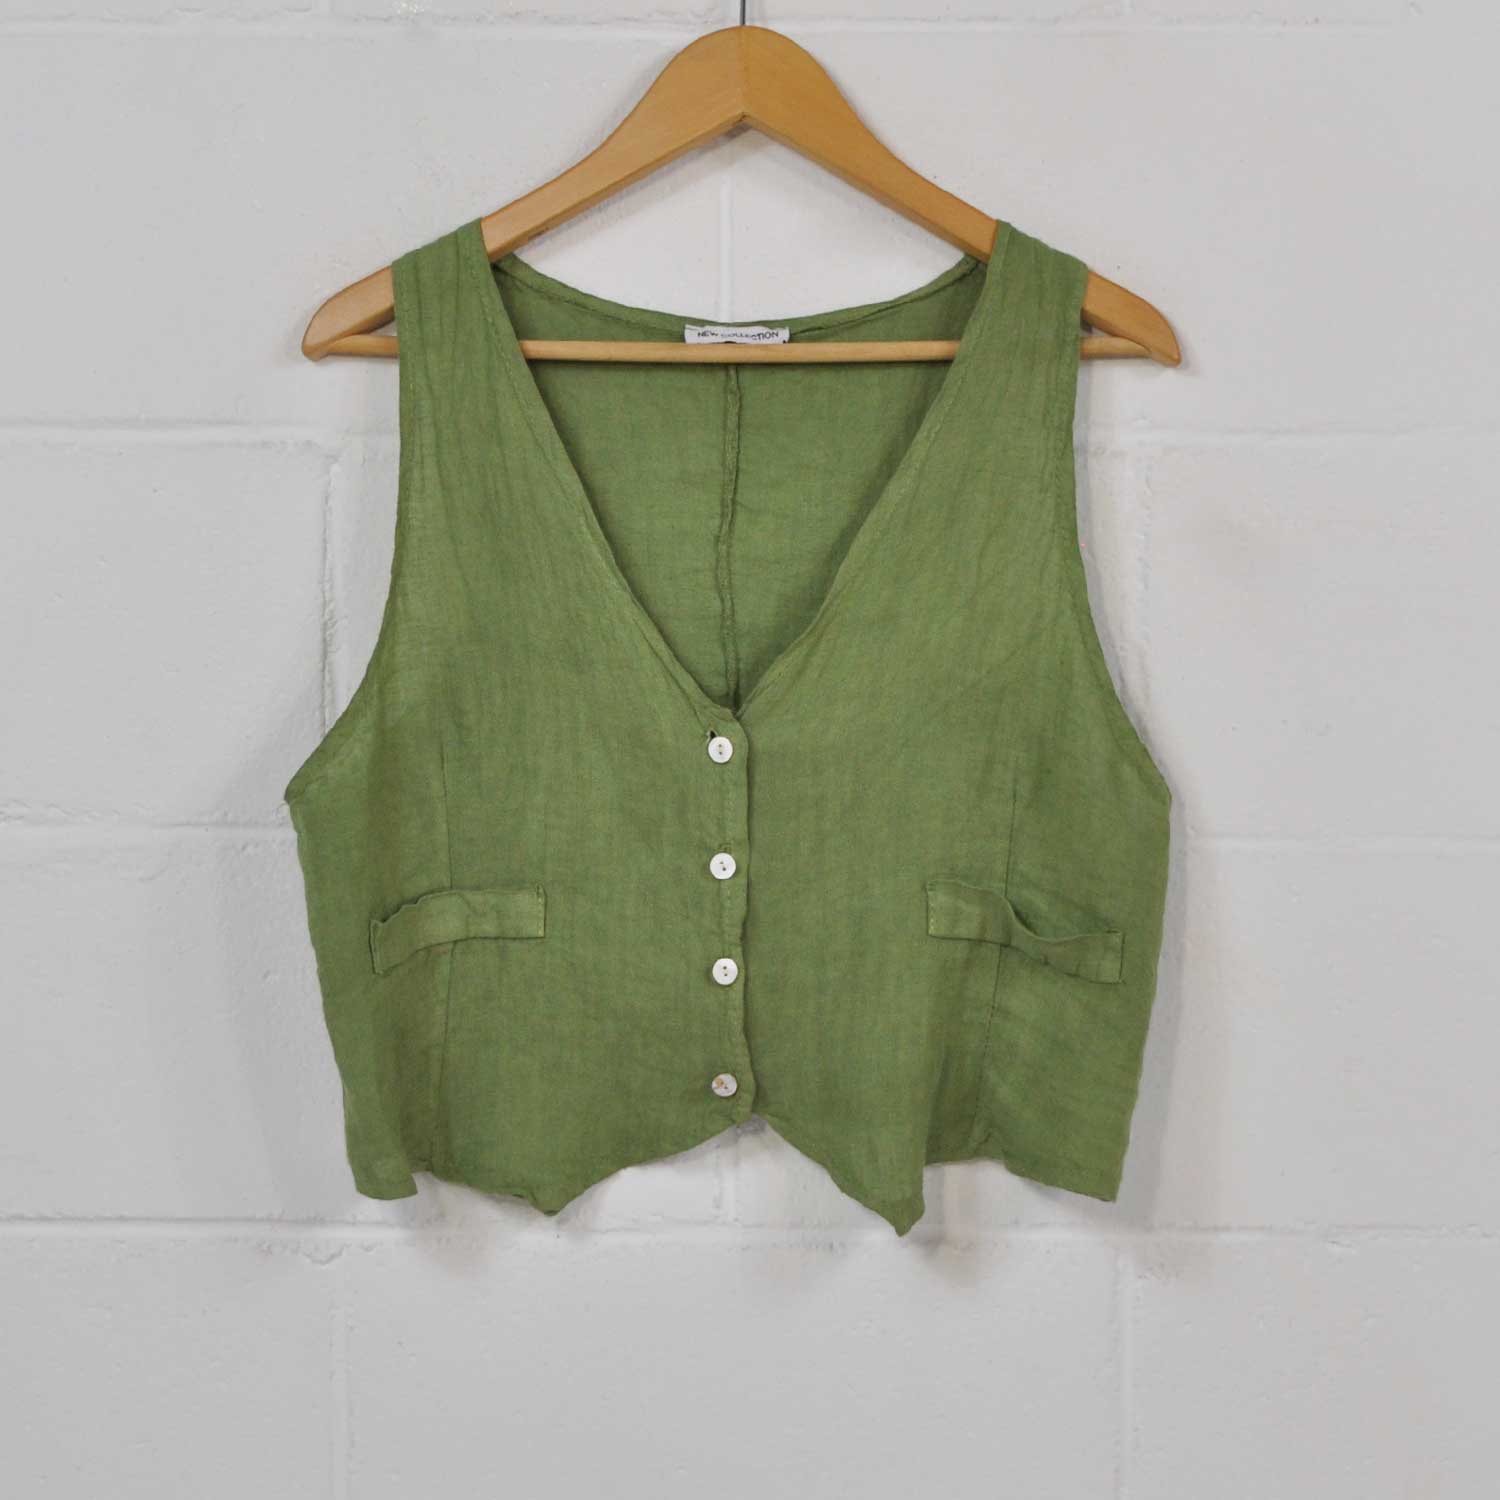 Green linen vest